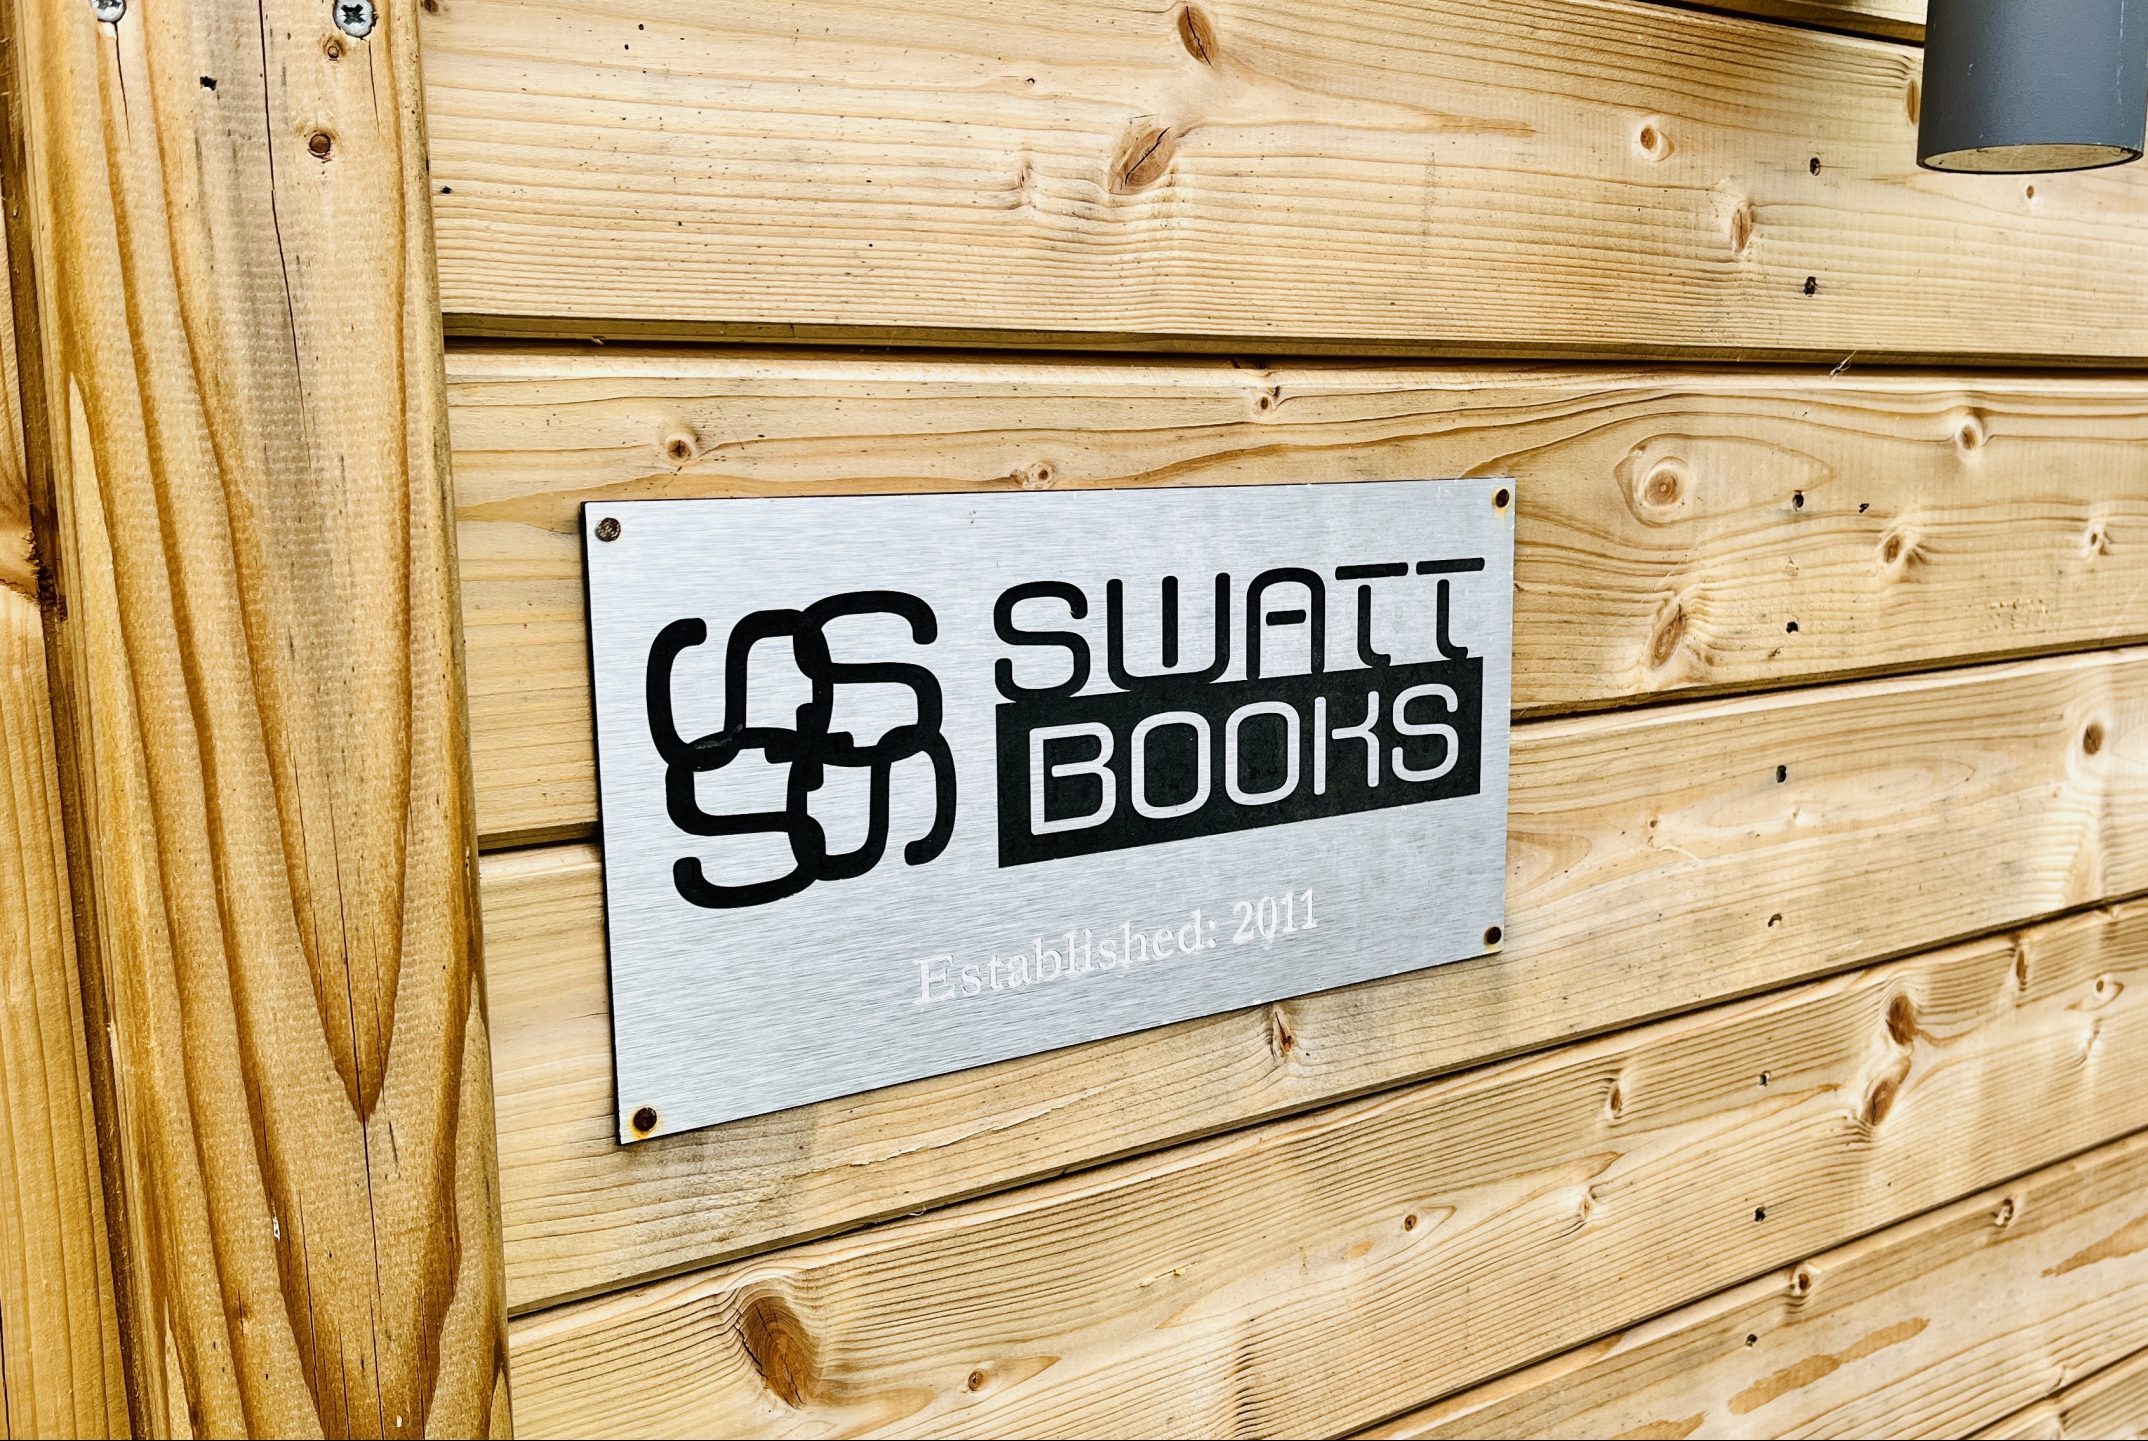 SWATT Books office plaque